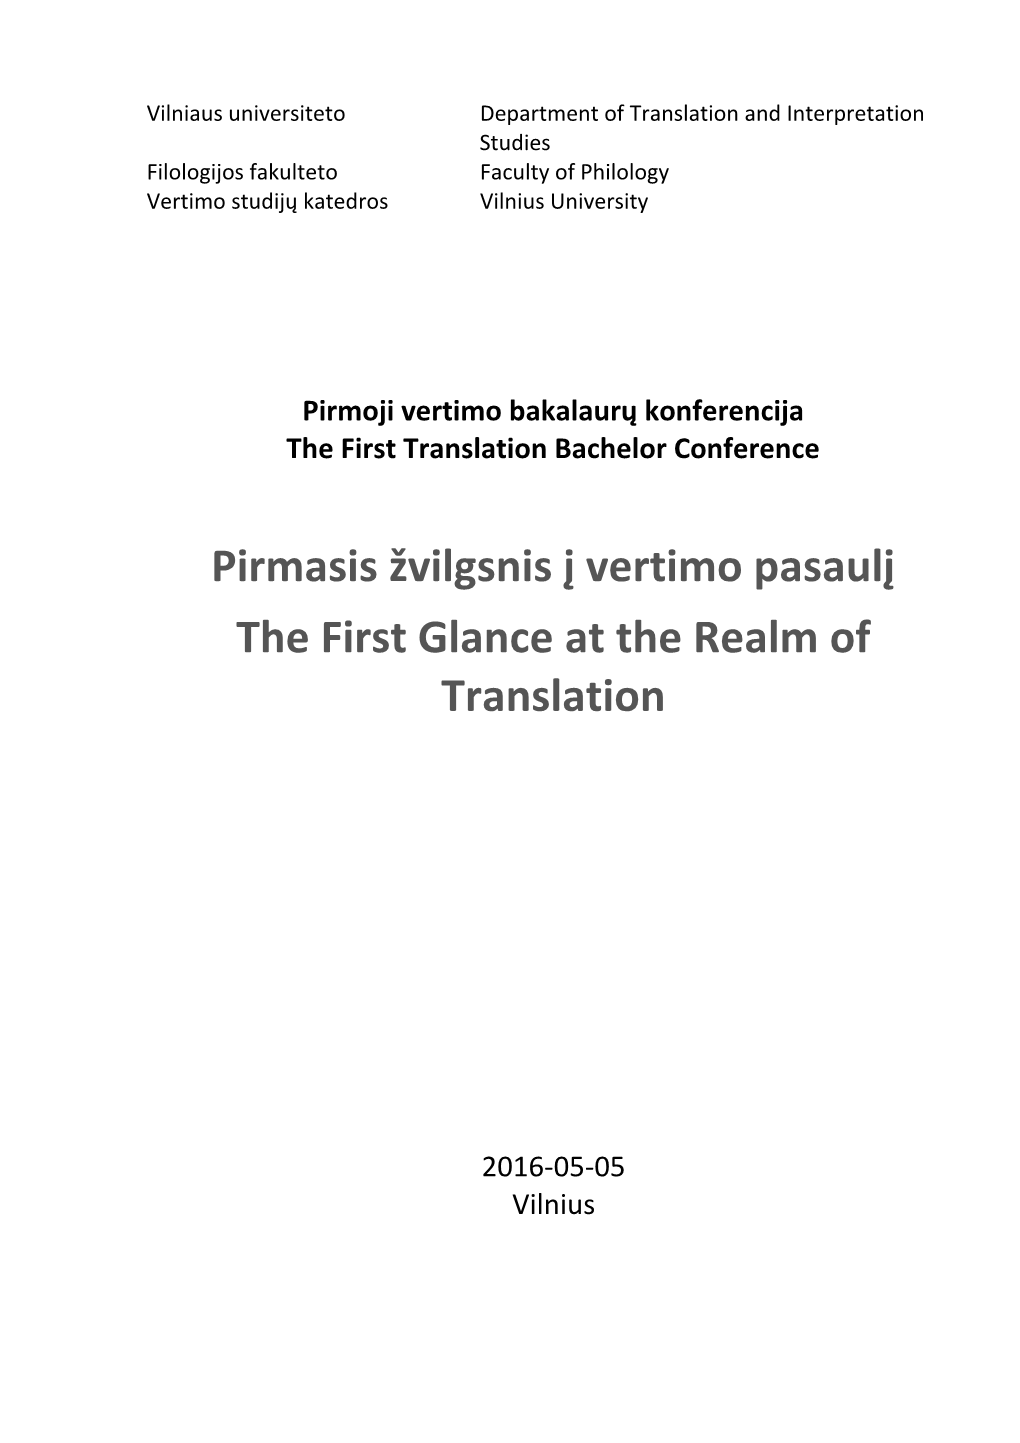 Vilniaus Universitetodepartmentof Translation and Interpretation Studies